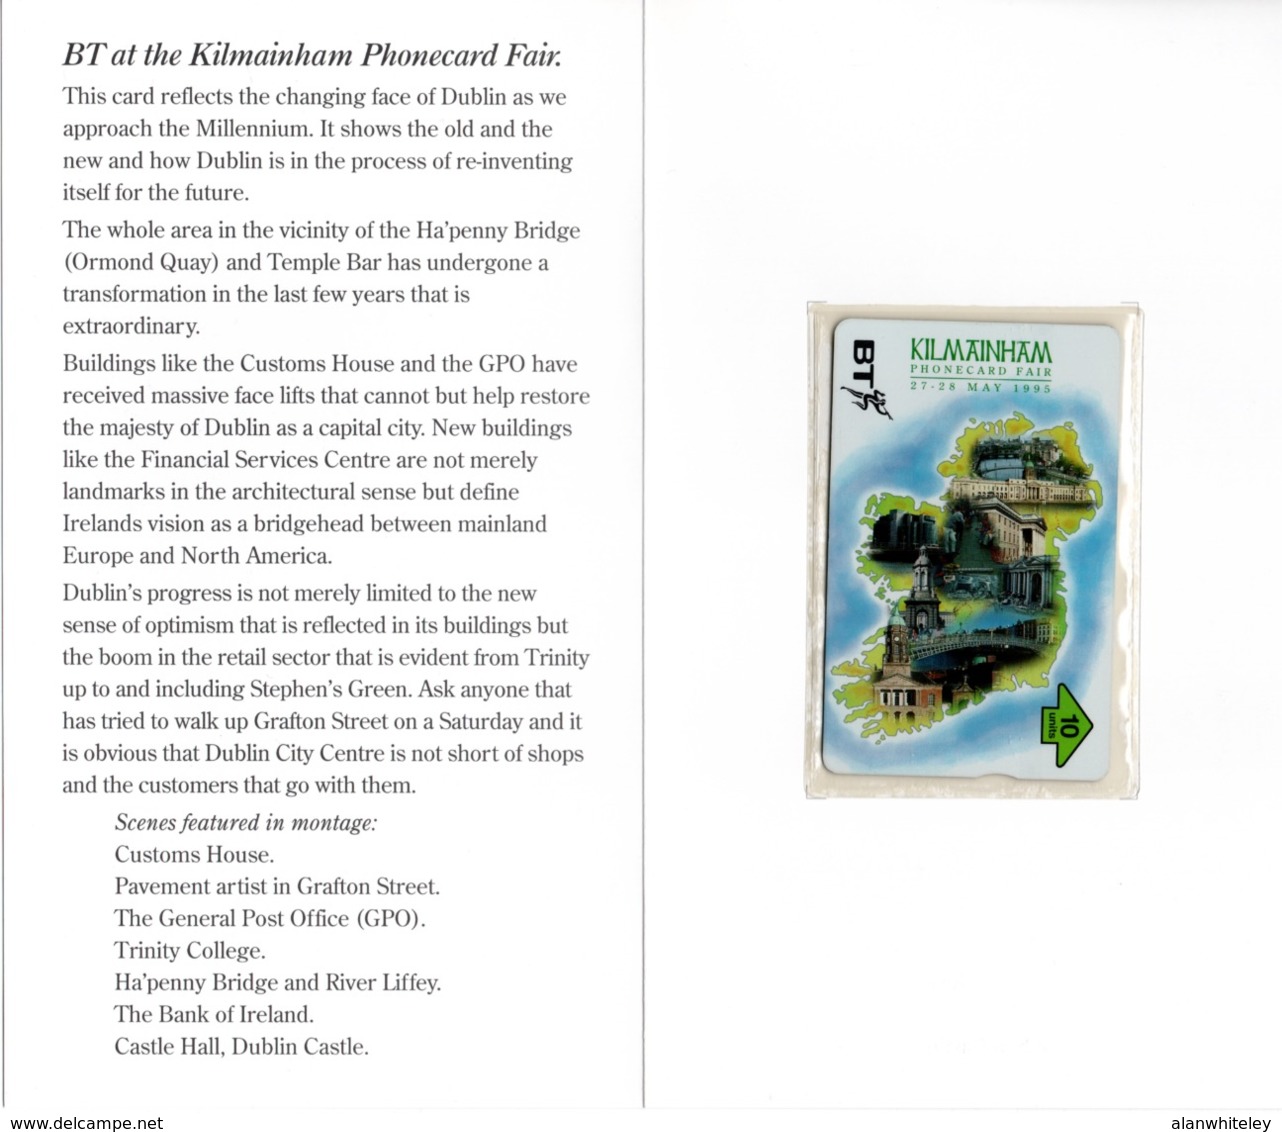 GREAT BRITAIN 1995 Kilmainham Phonecard Fair: Presentation Pack Containing 1 Phonecard MINT/UNUSED - BT Global Cards (Prepaid)